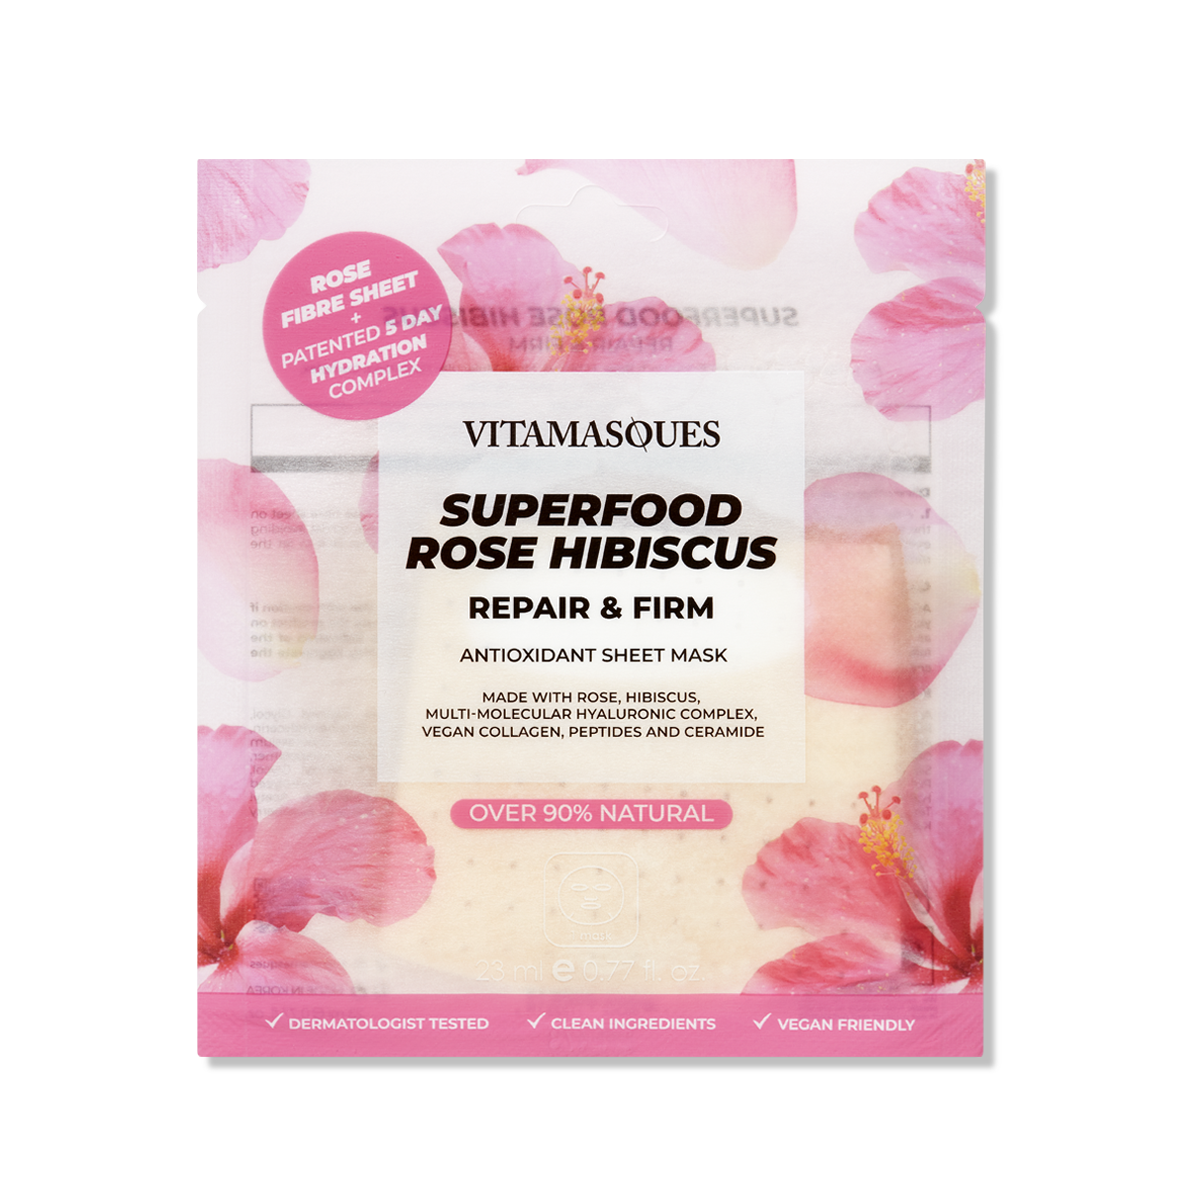 Superfood Rose Hibiscus Repair & Firm Antioxidant Sheet Mask